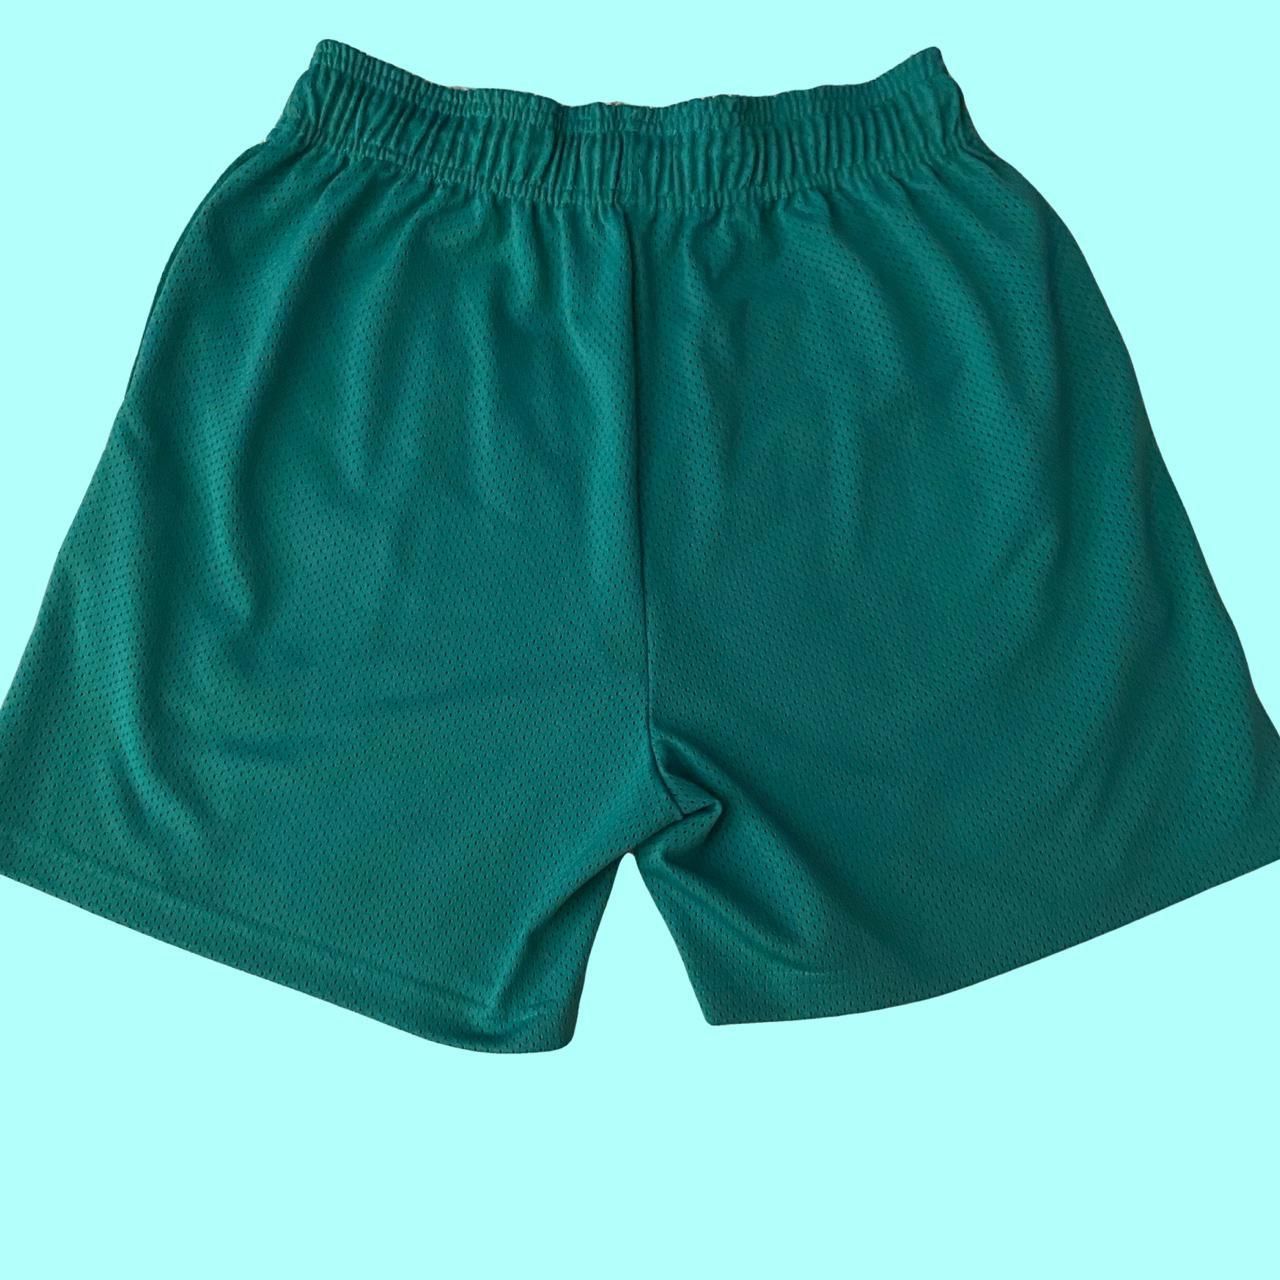 Men's Orange and Green Shorts (2)